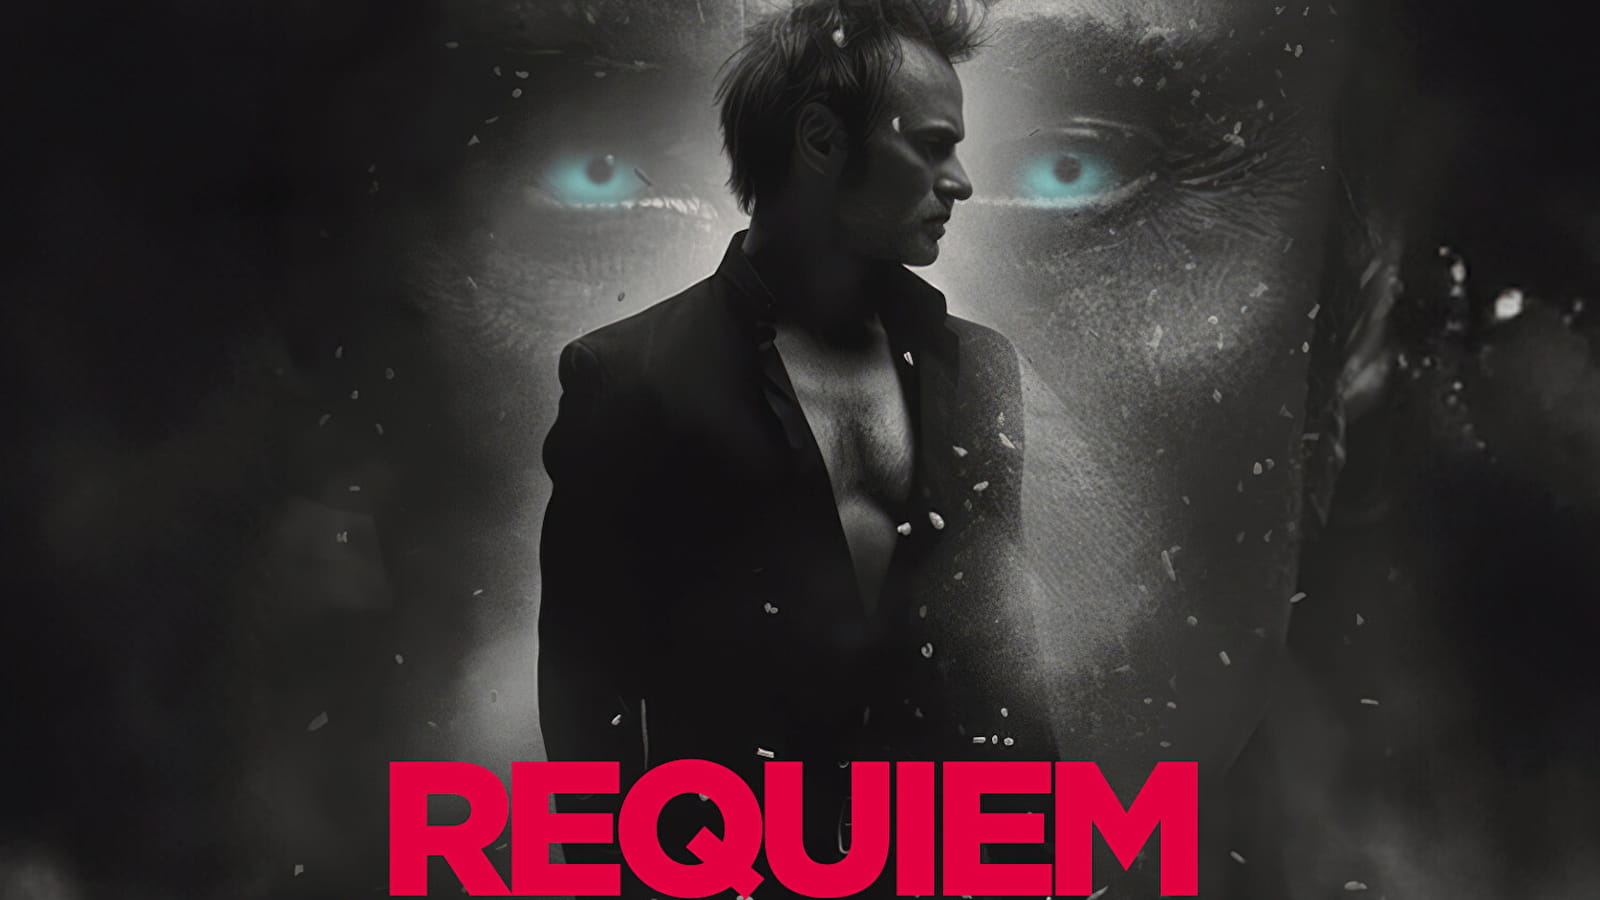 David Hallyday - Requiem for a madman